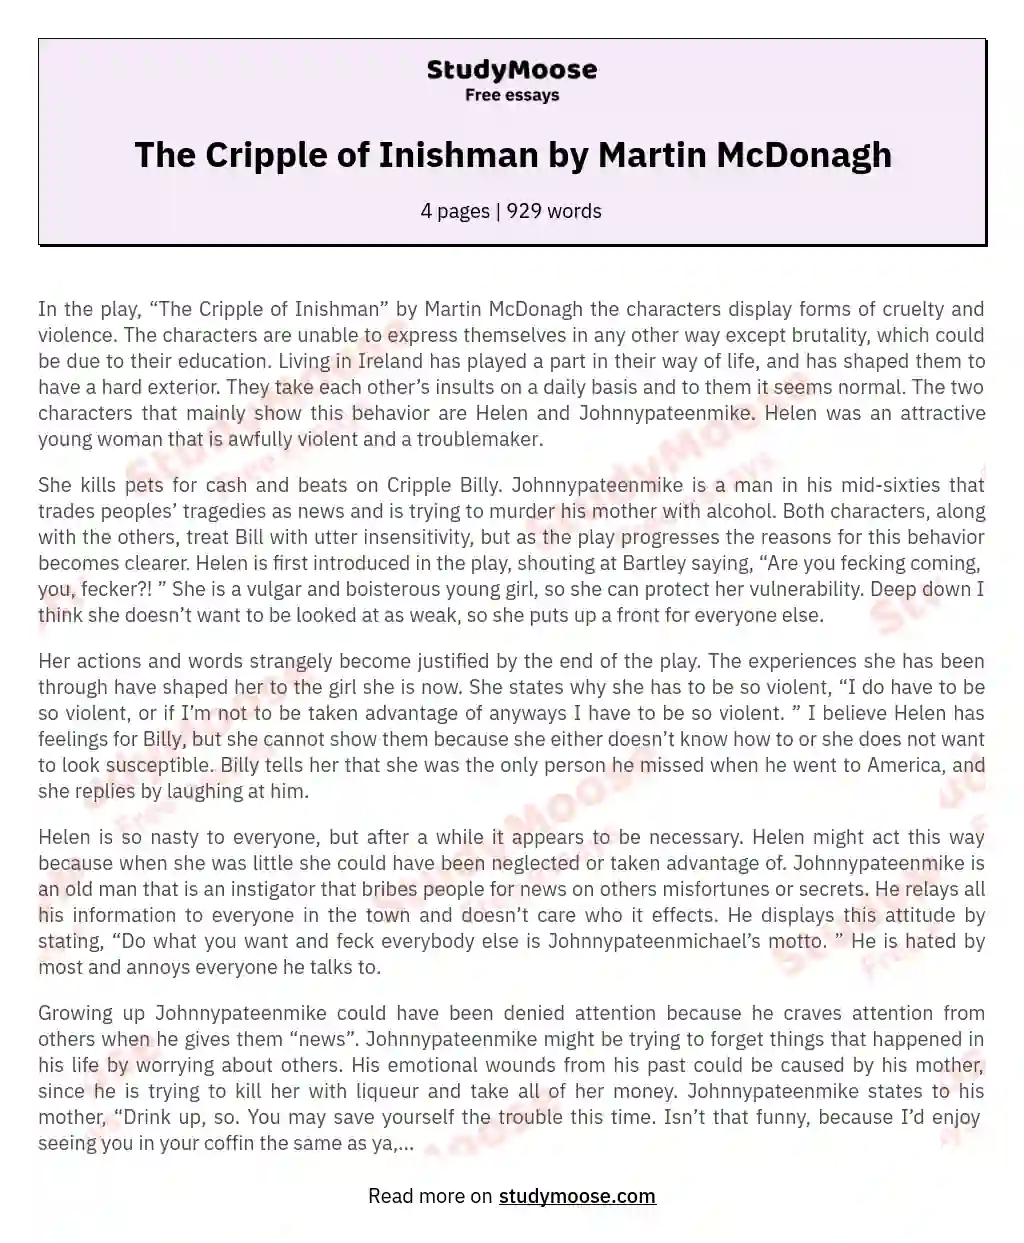 The Cripple of Inishman by Martin McDonagh essay